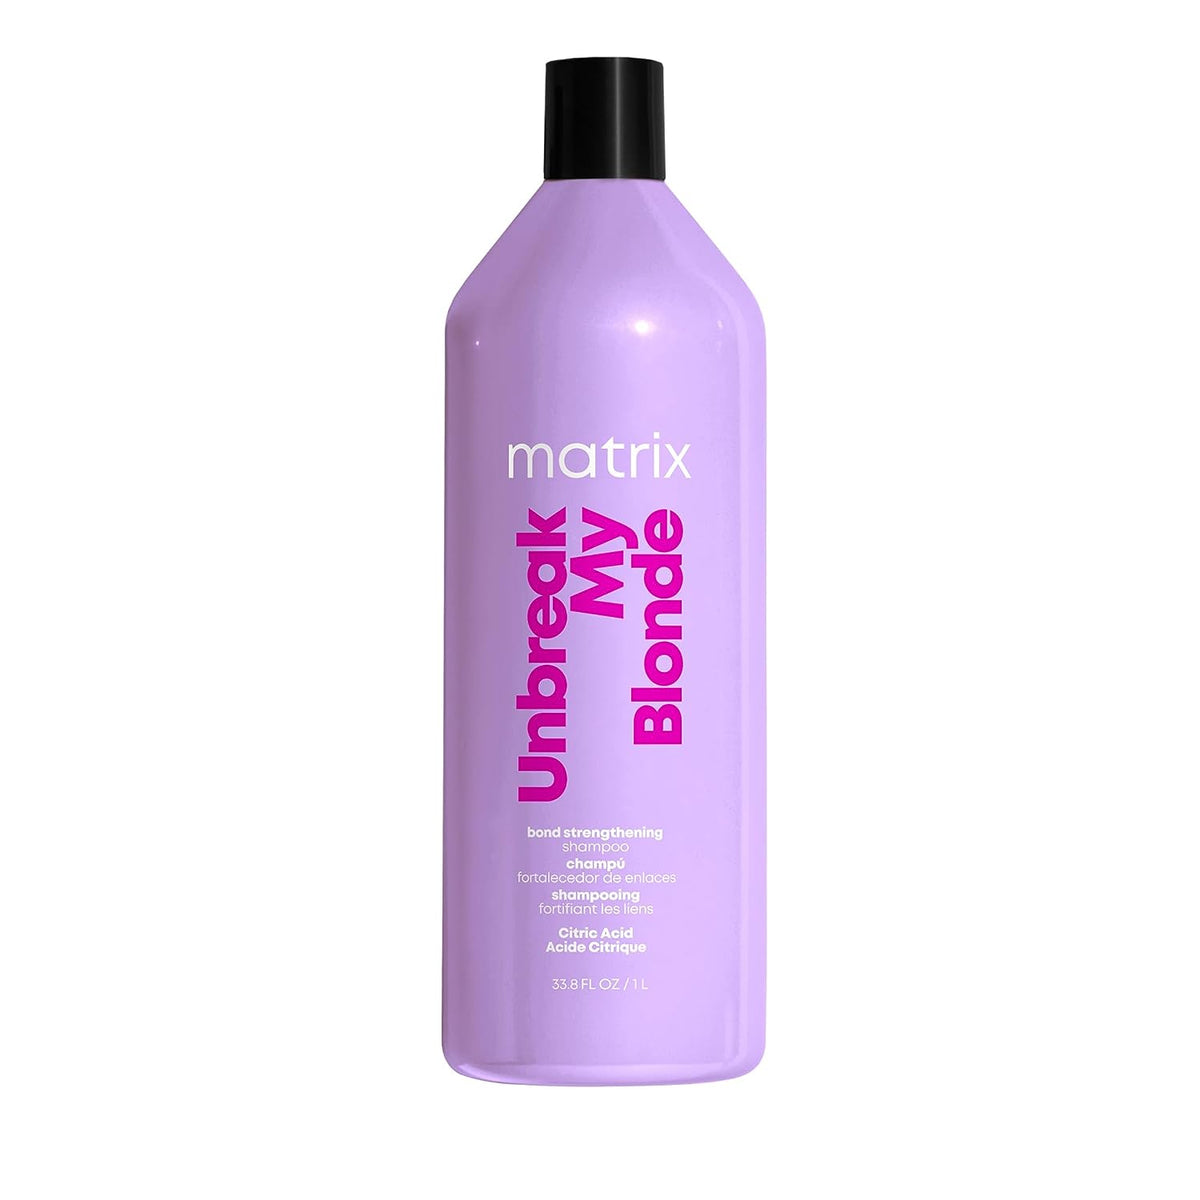 Matrix - Résultats totaux - Shampooing Unbreak My Blonde | 33,8 oz |